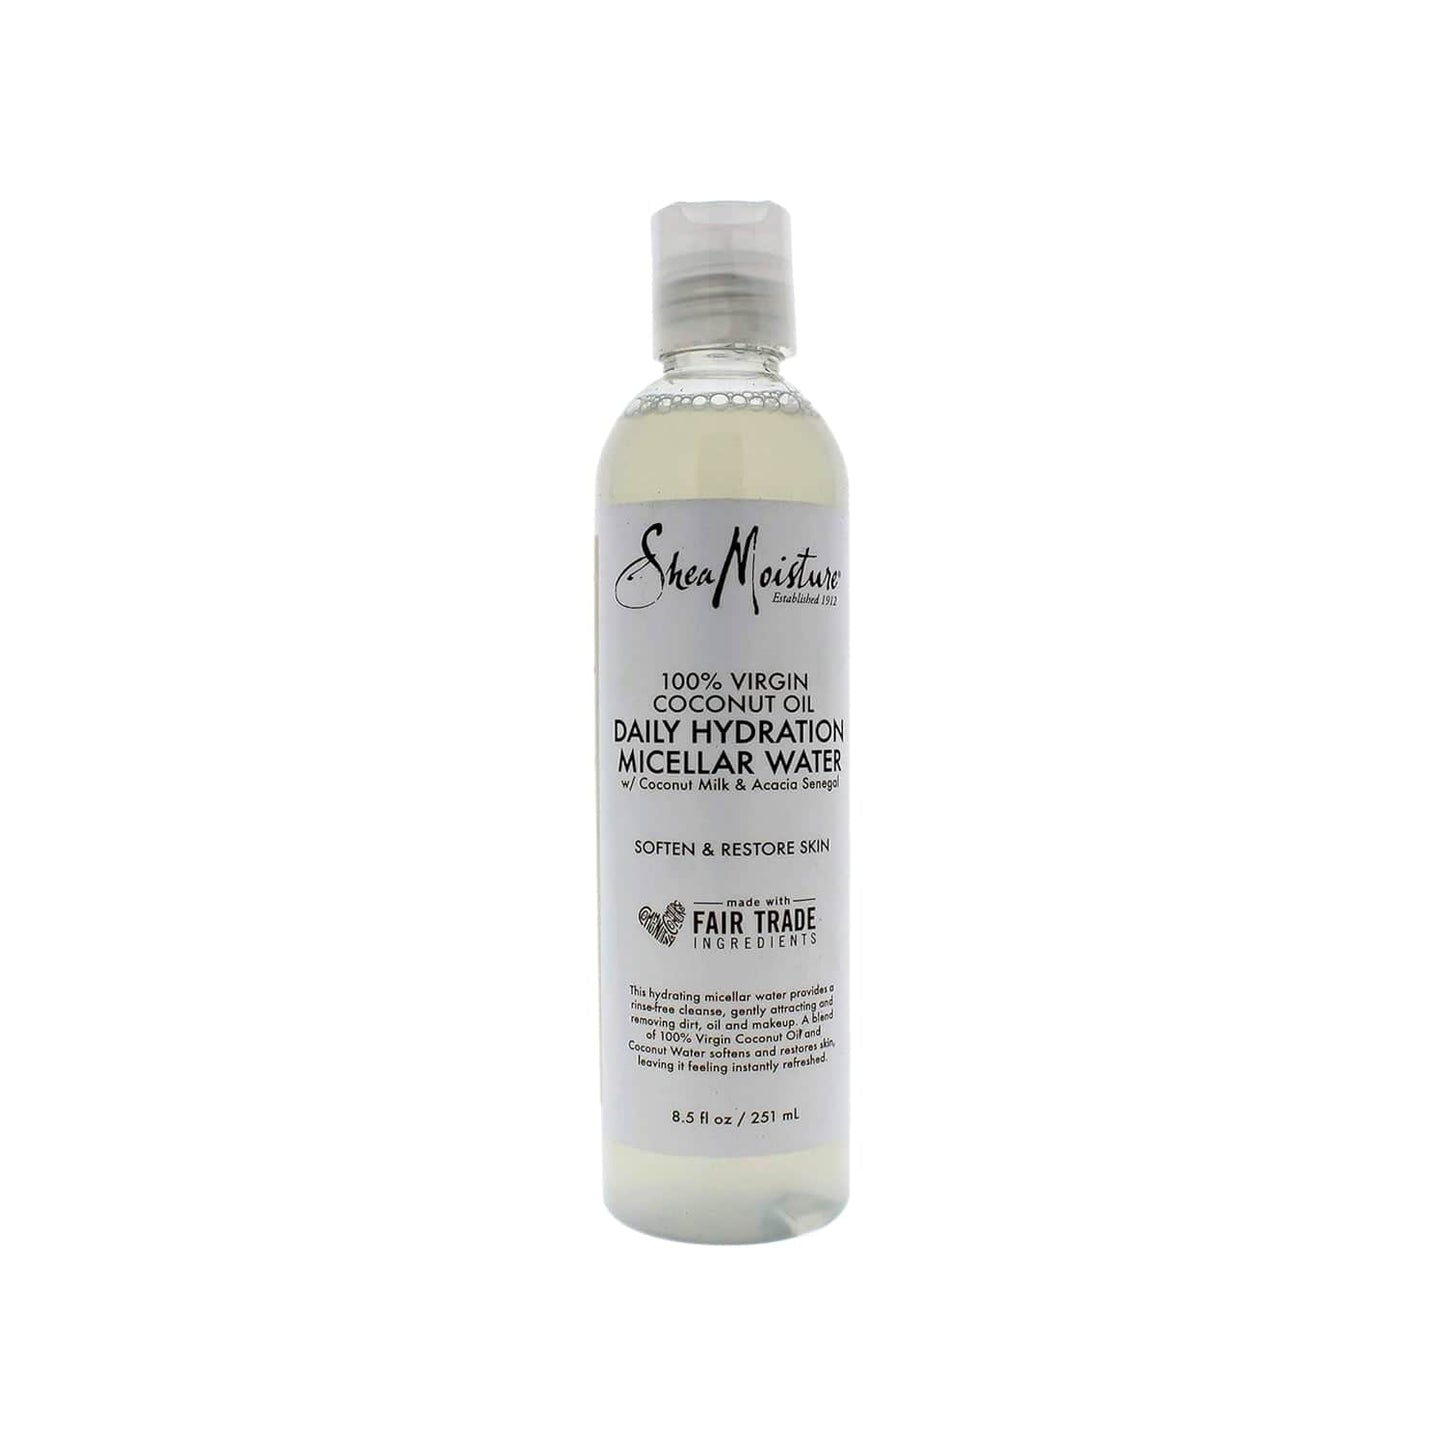 Shea Moisture - 100% Virgin Coconut Oil - "Daily Hydration" micellar water - 227ml - Shea Moisture - Ethni Beauty Market